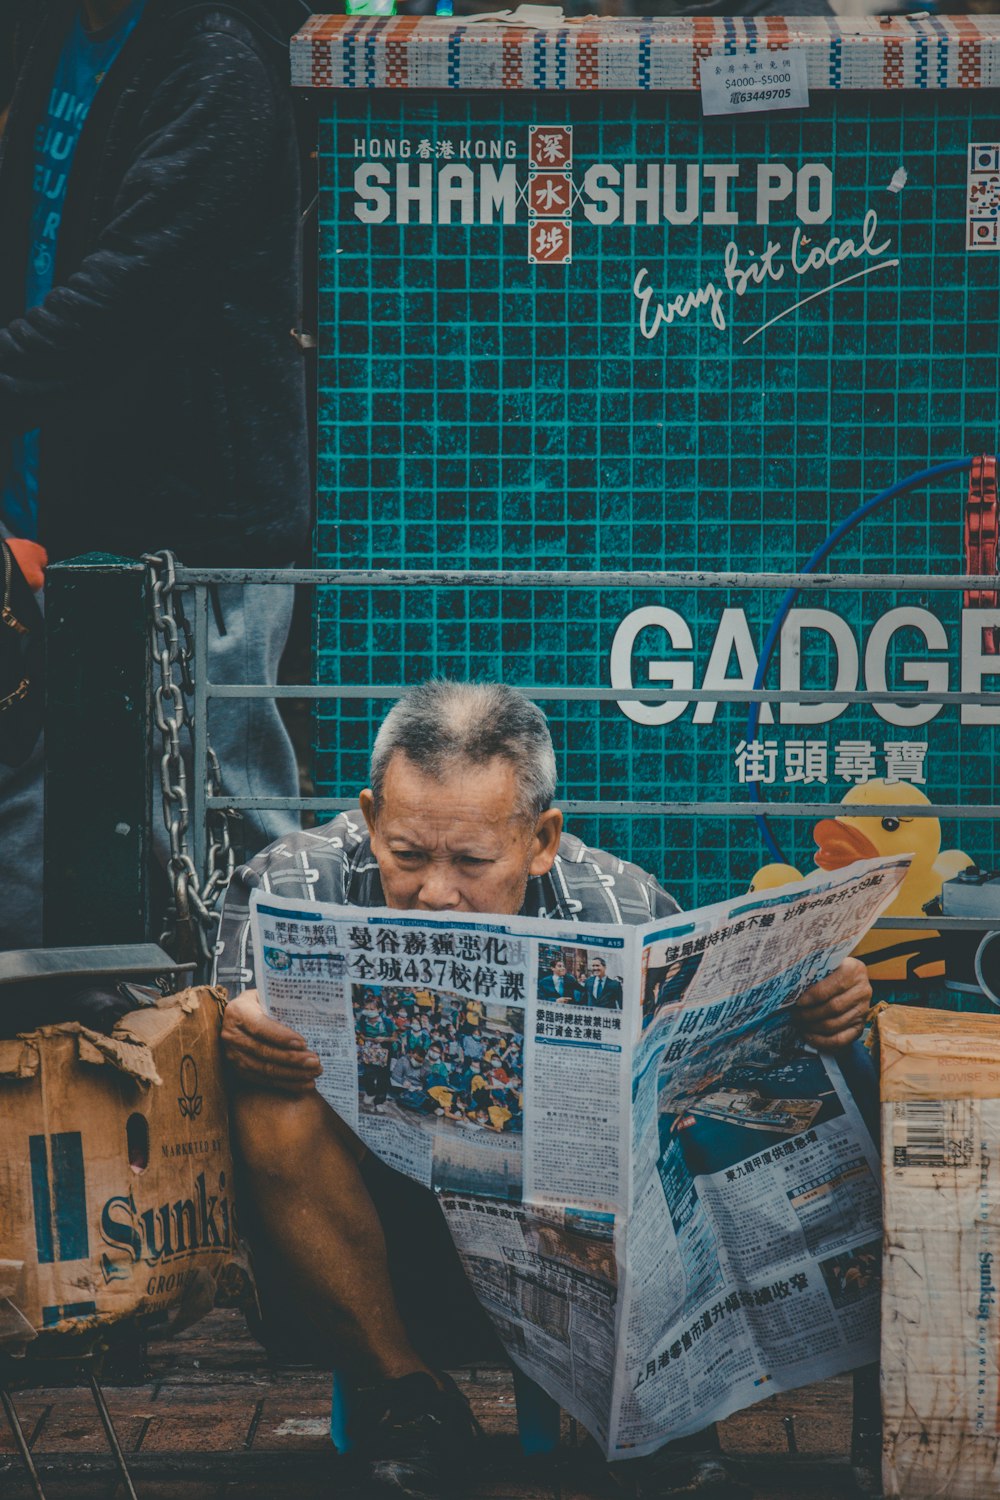 man reading newspaper